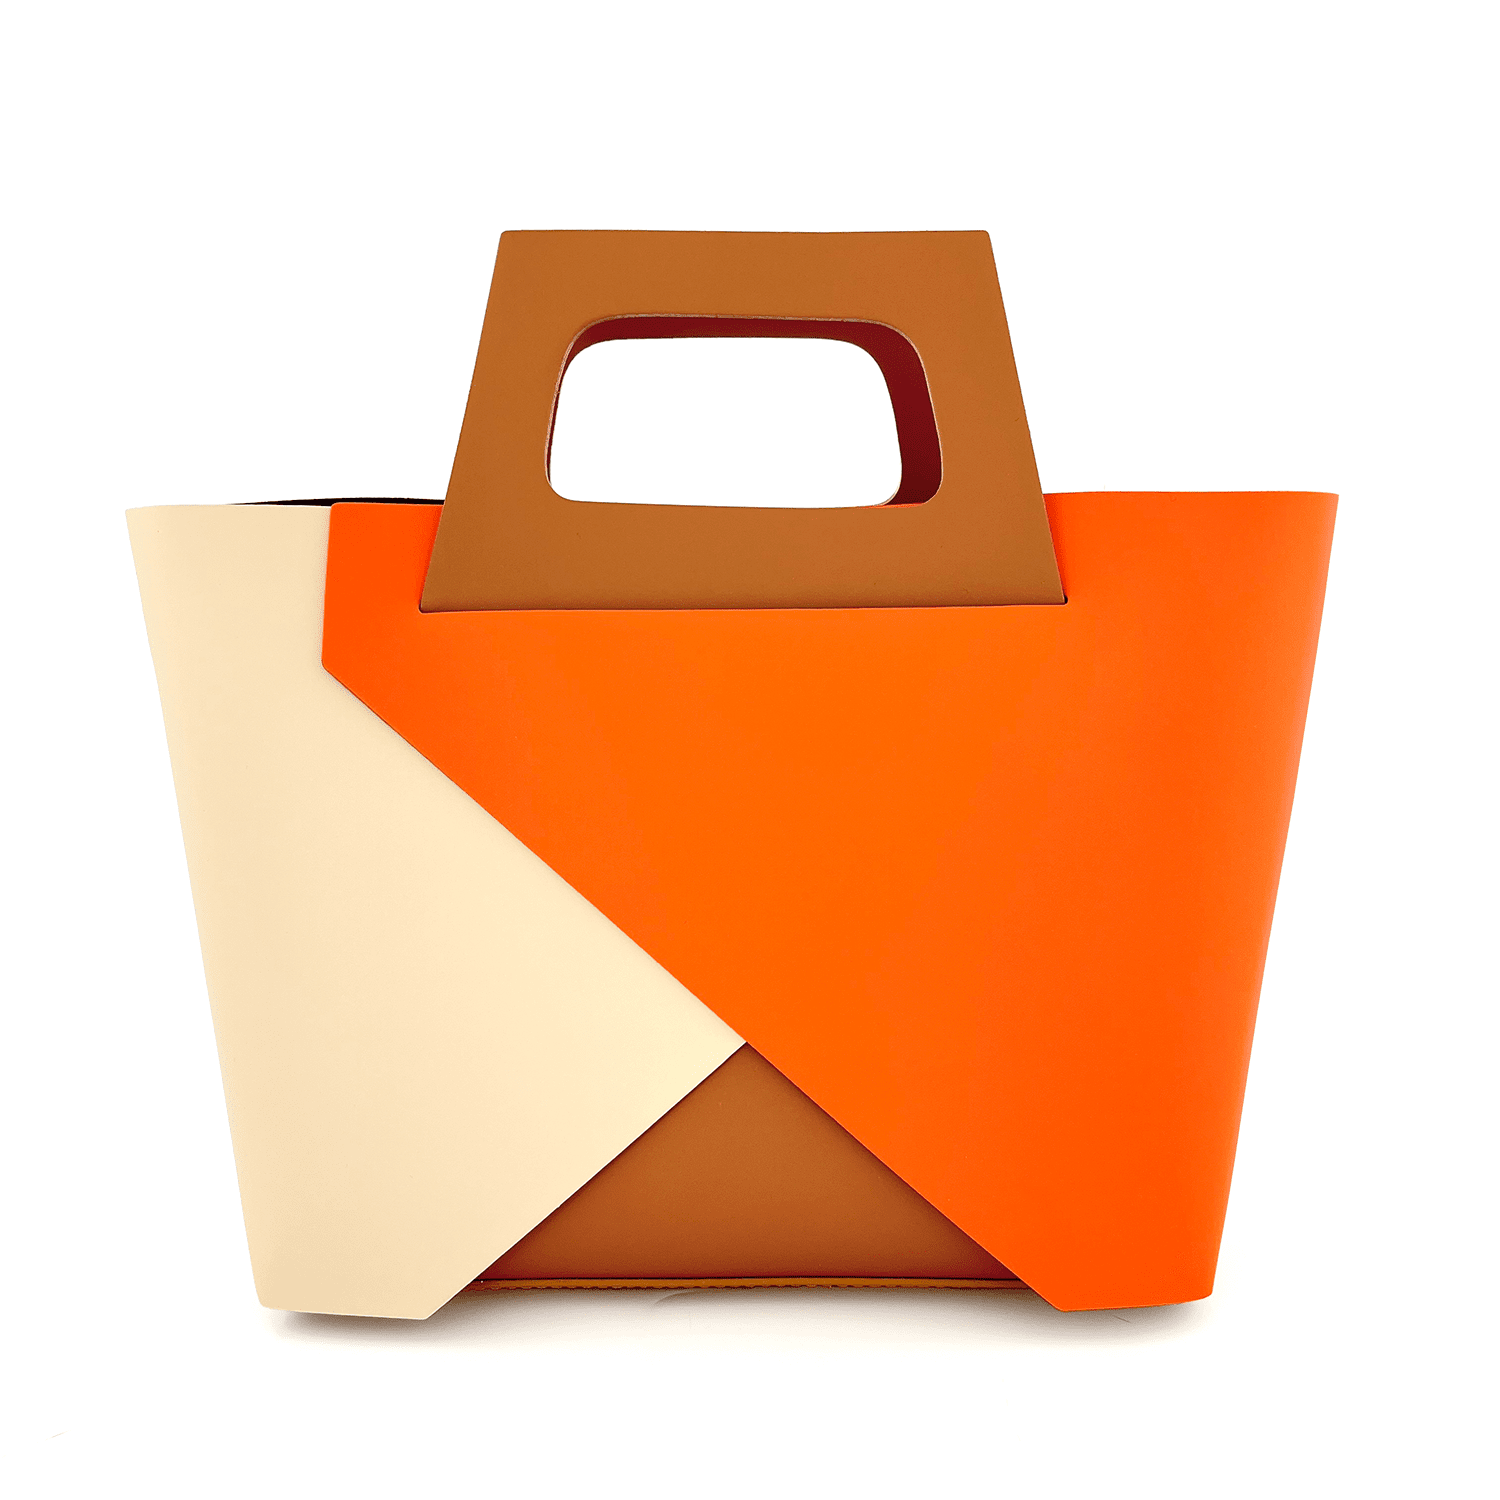 Дамска чанта от естествена кожа Gida - оранжево/бежово/керемидено кафяво